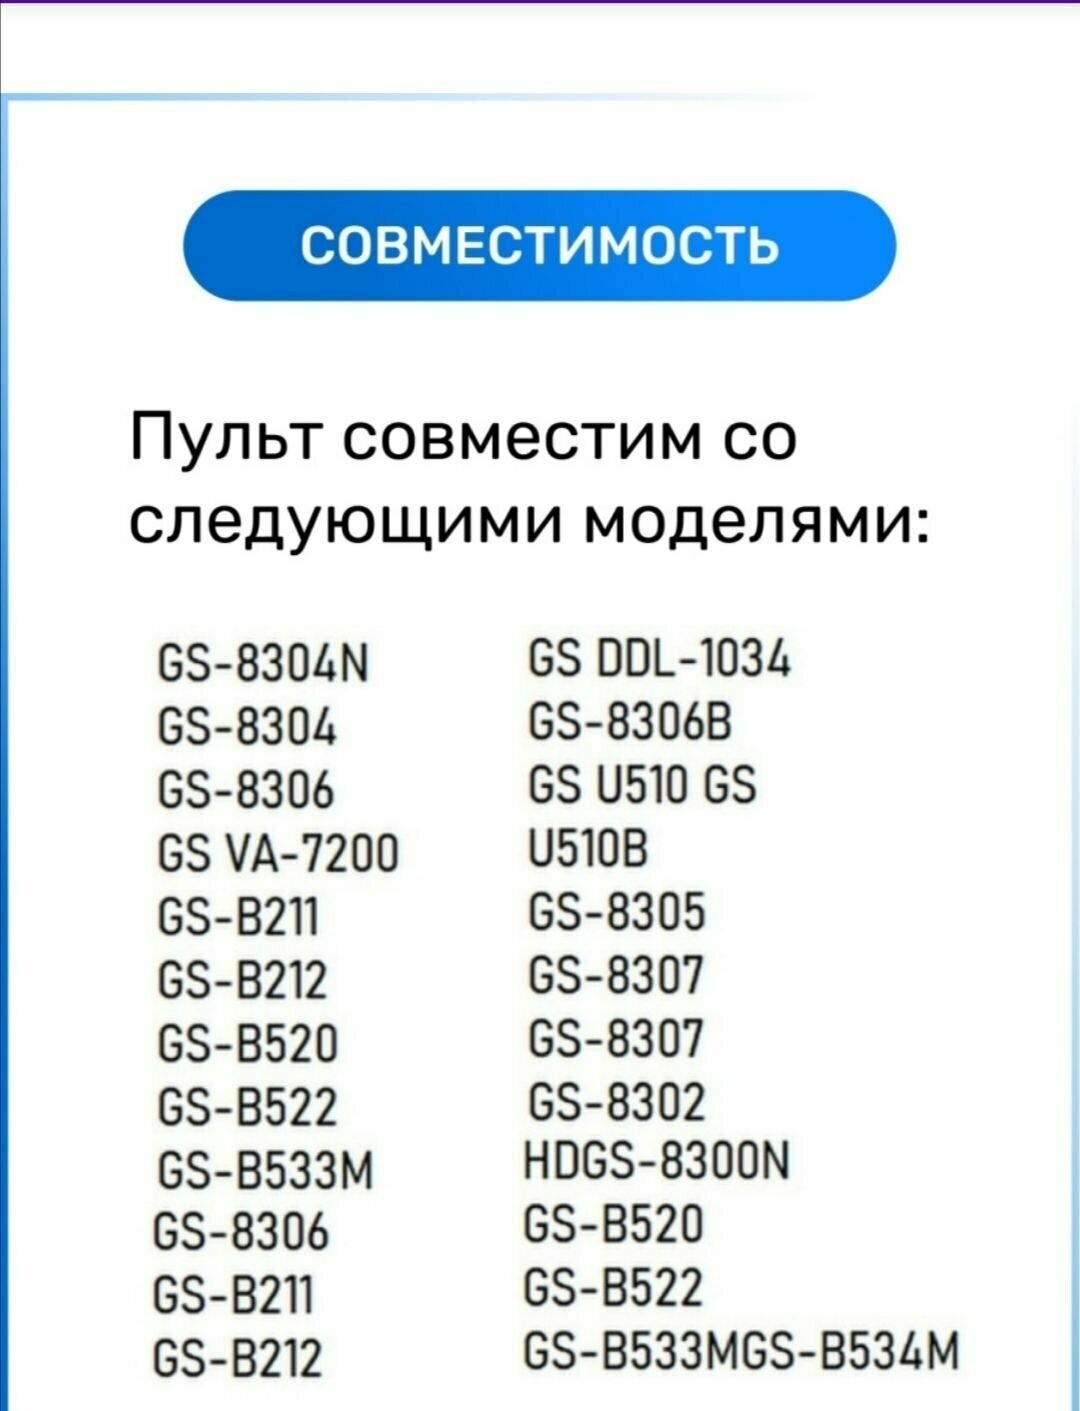 Пульт ДУ Триколор GS-8306